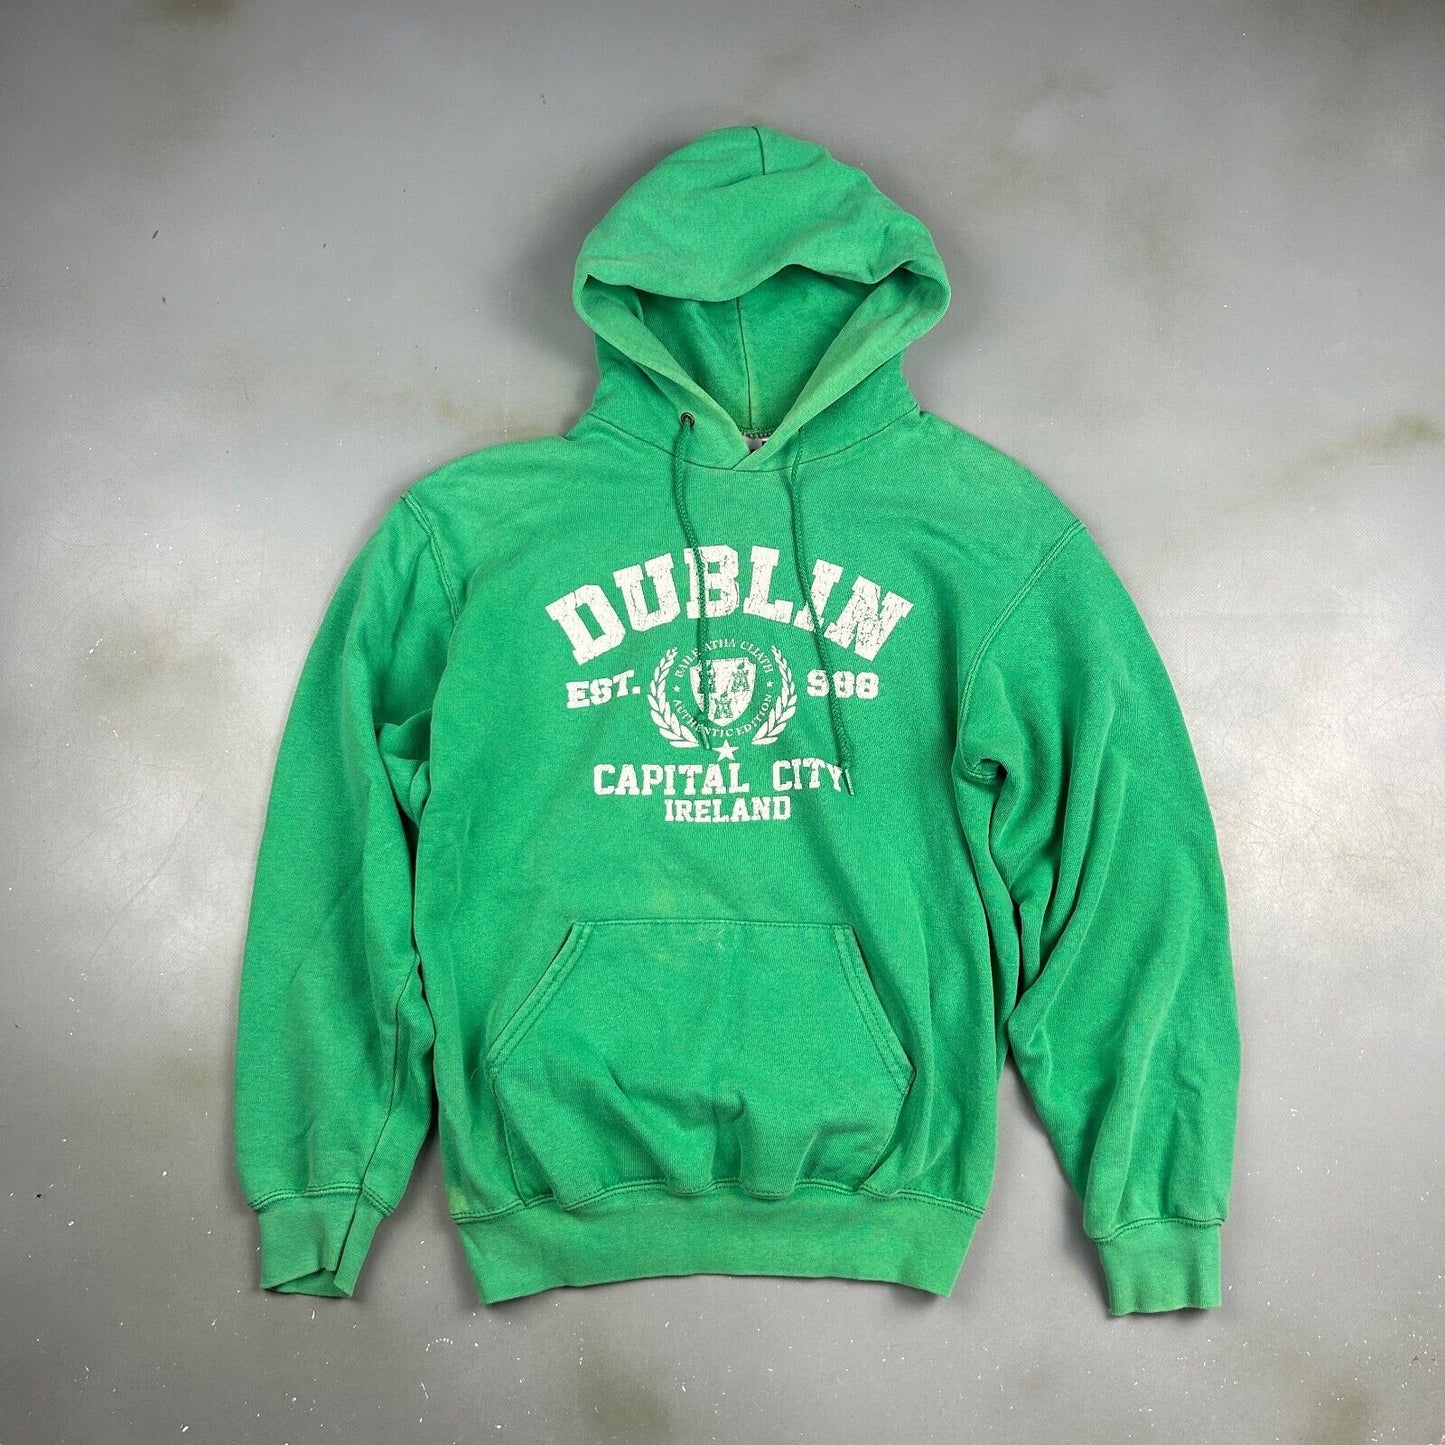 VINTAGE Dublin Ireland Green Hoodie Sweater sz Small Adult